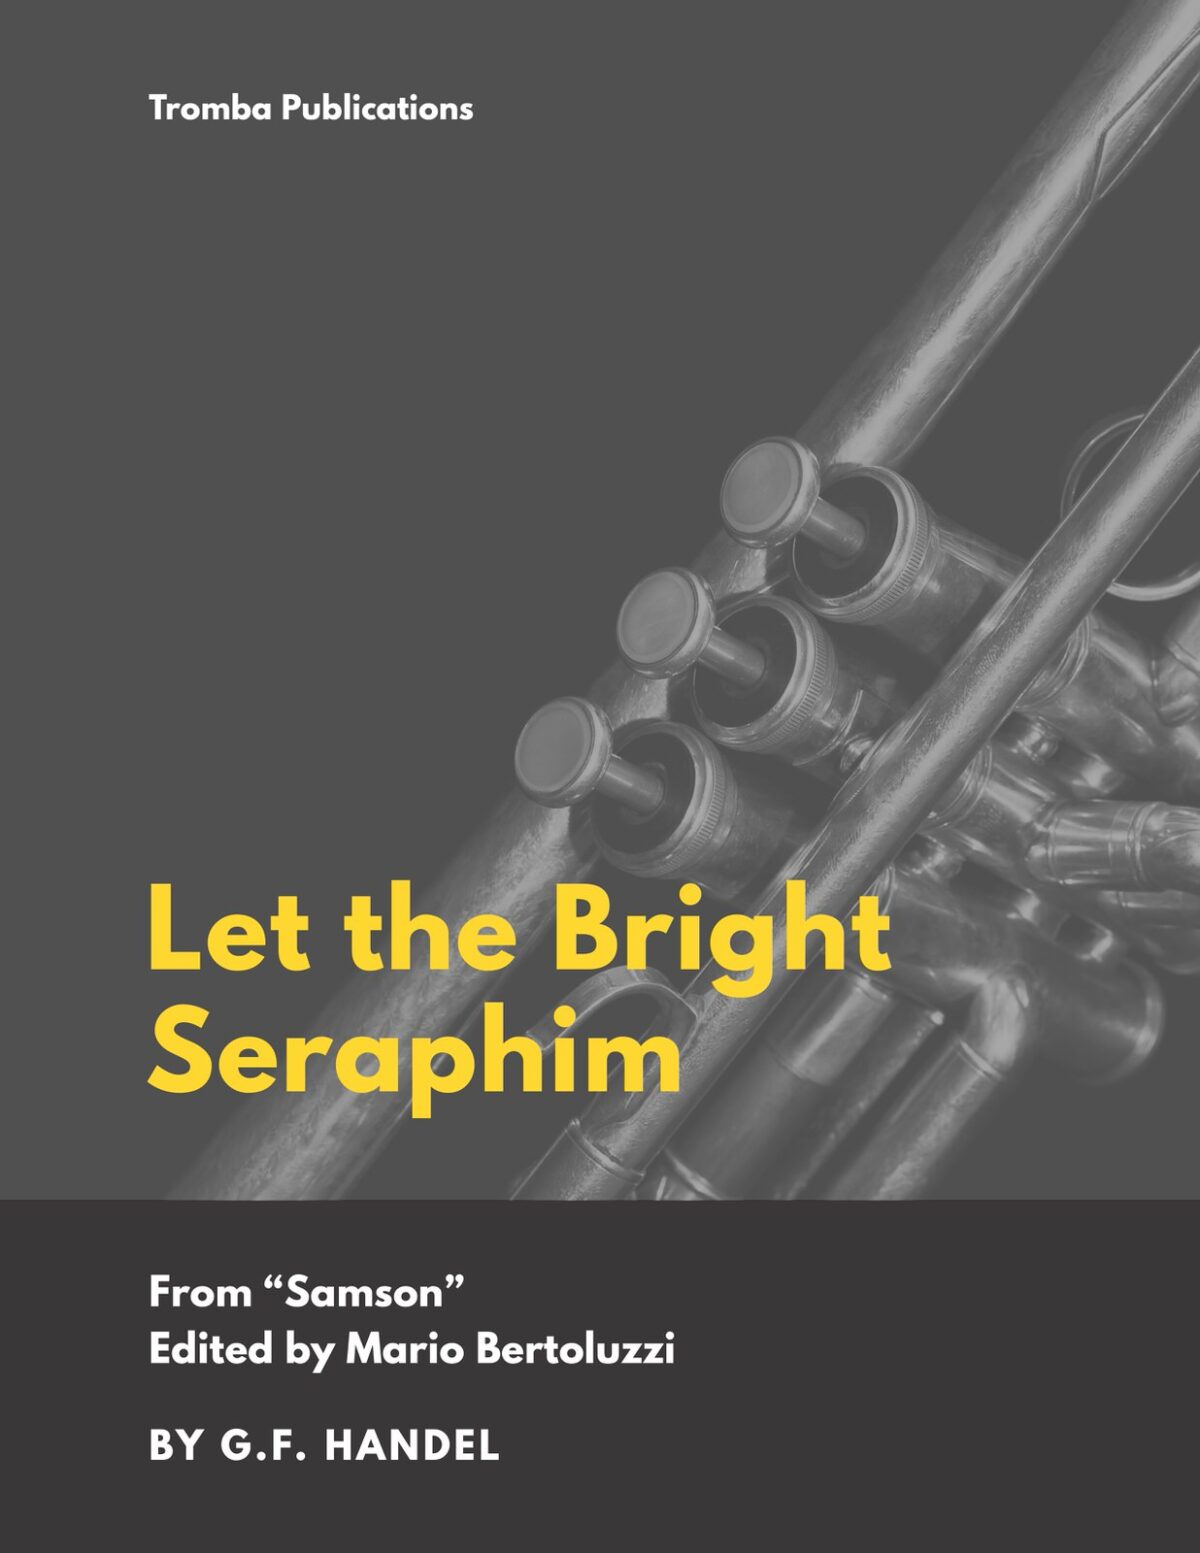 Handel, The Bright Seraphim-p01